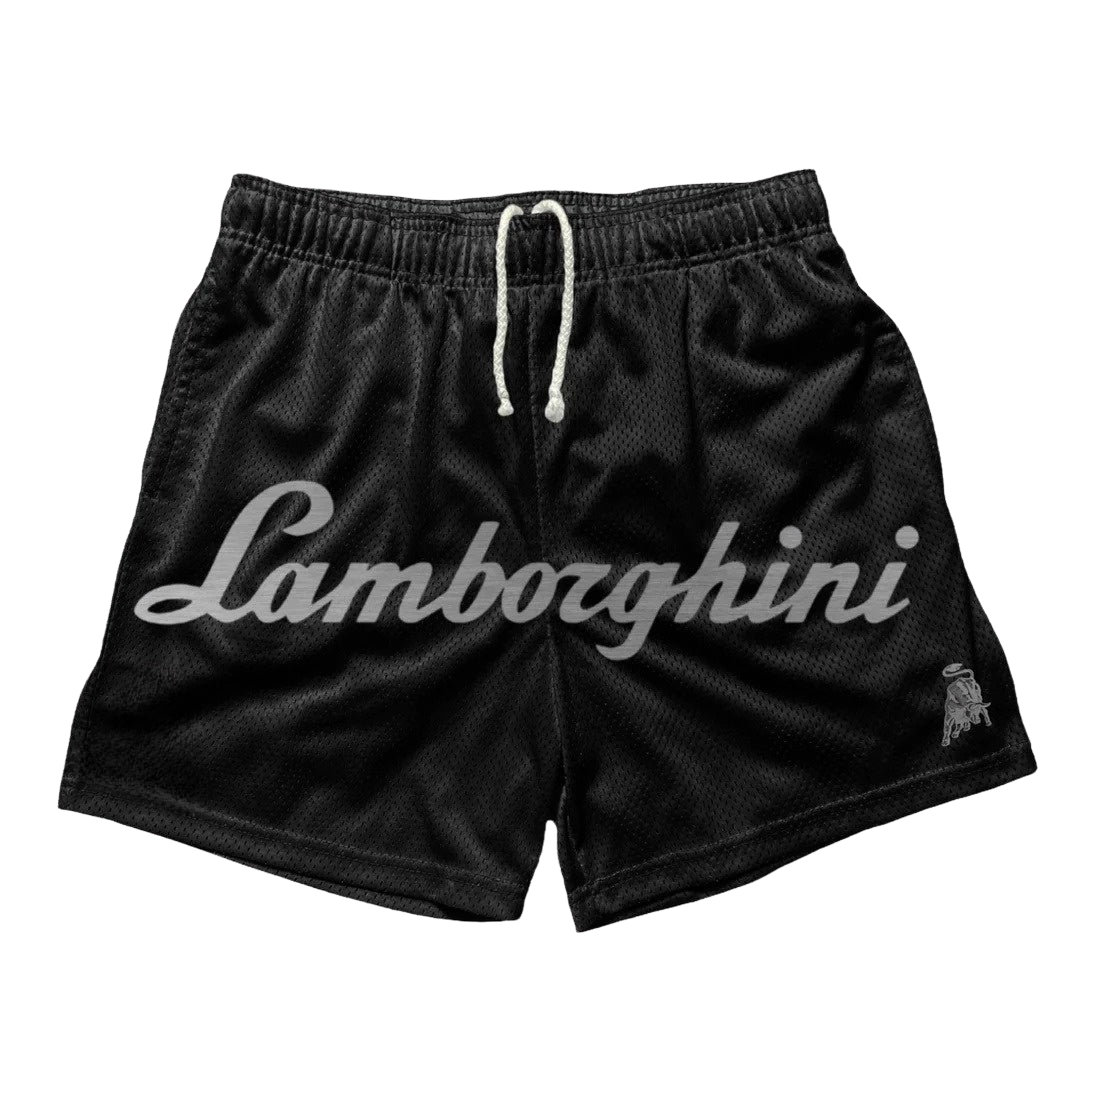 a black shorts with the word lambooshini printed on it